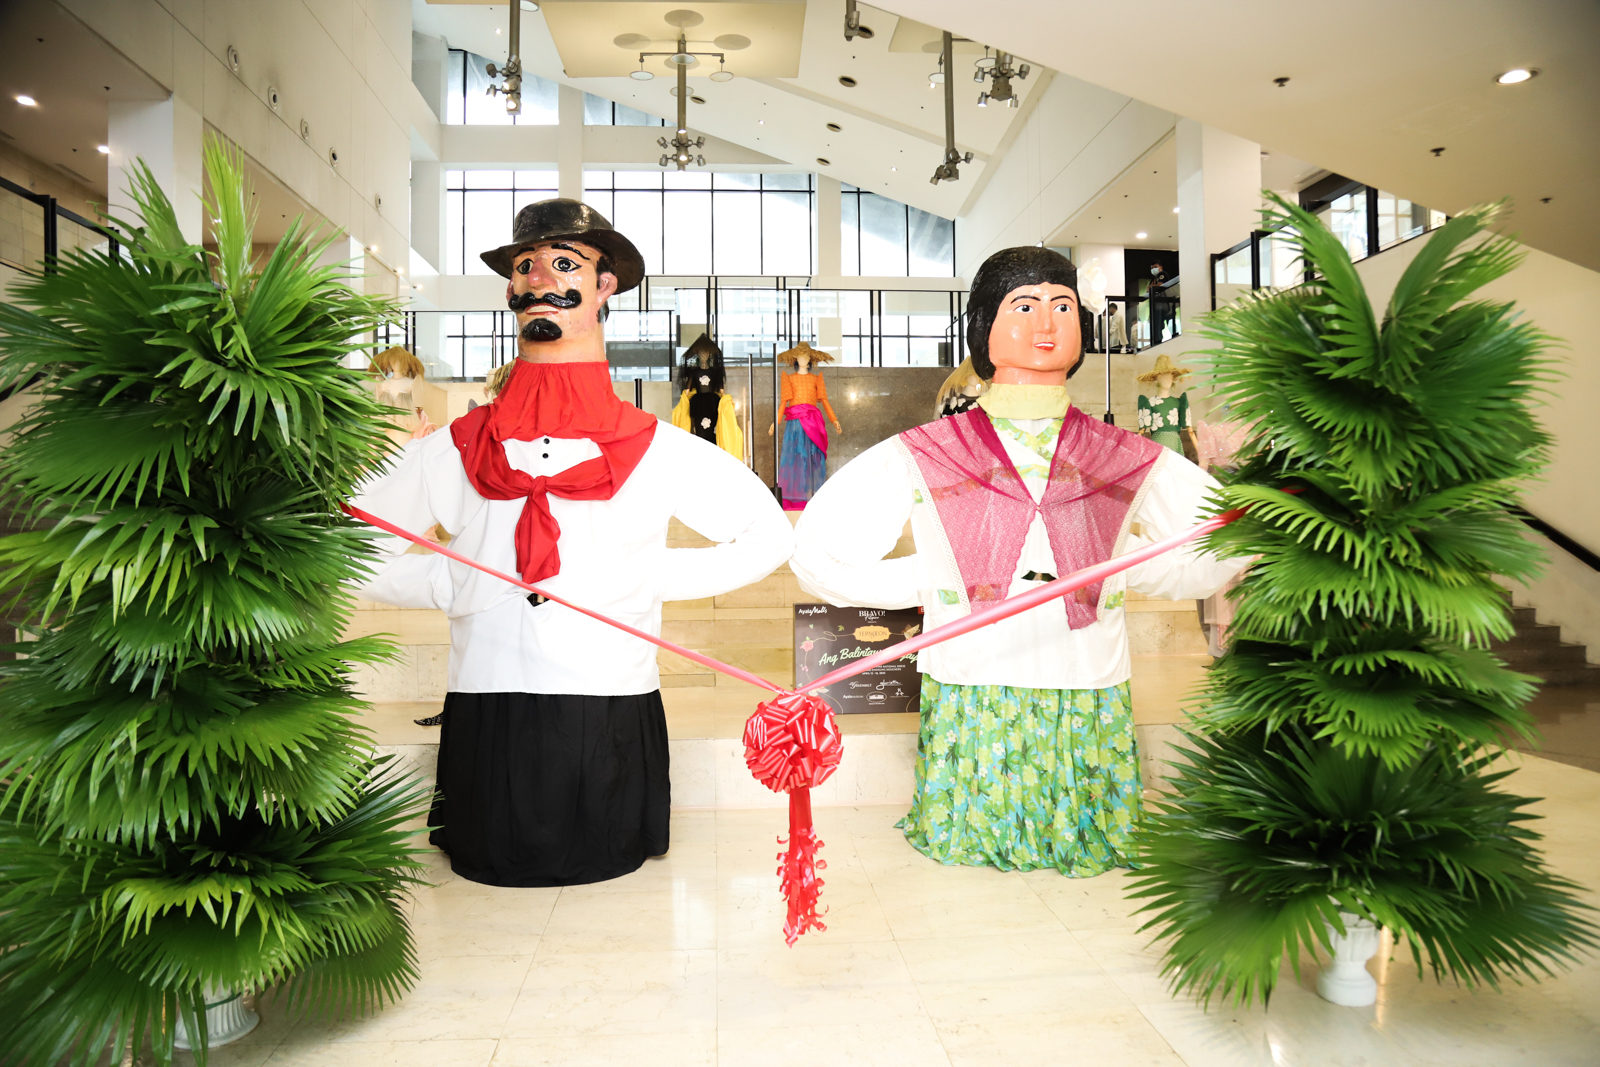 Higantes in ternocon exhibit in Greenbelt 5, Ayala Museum, and the Glorietta Activity Center